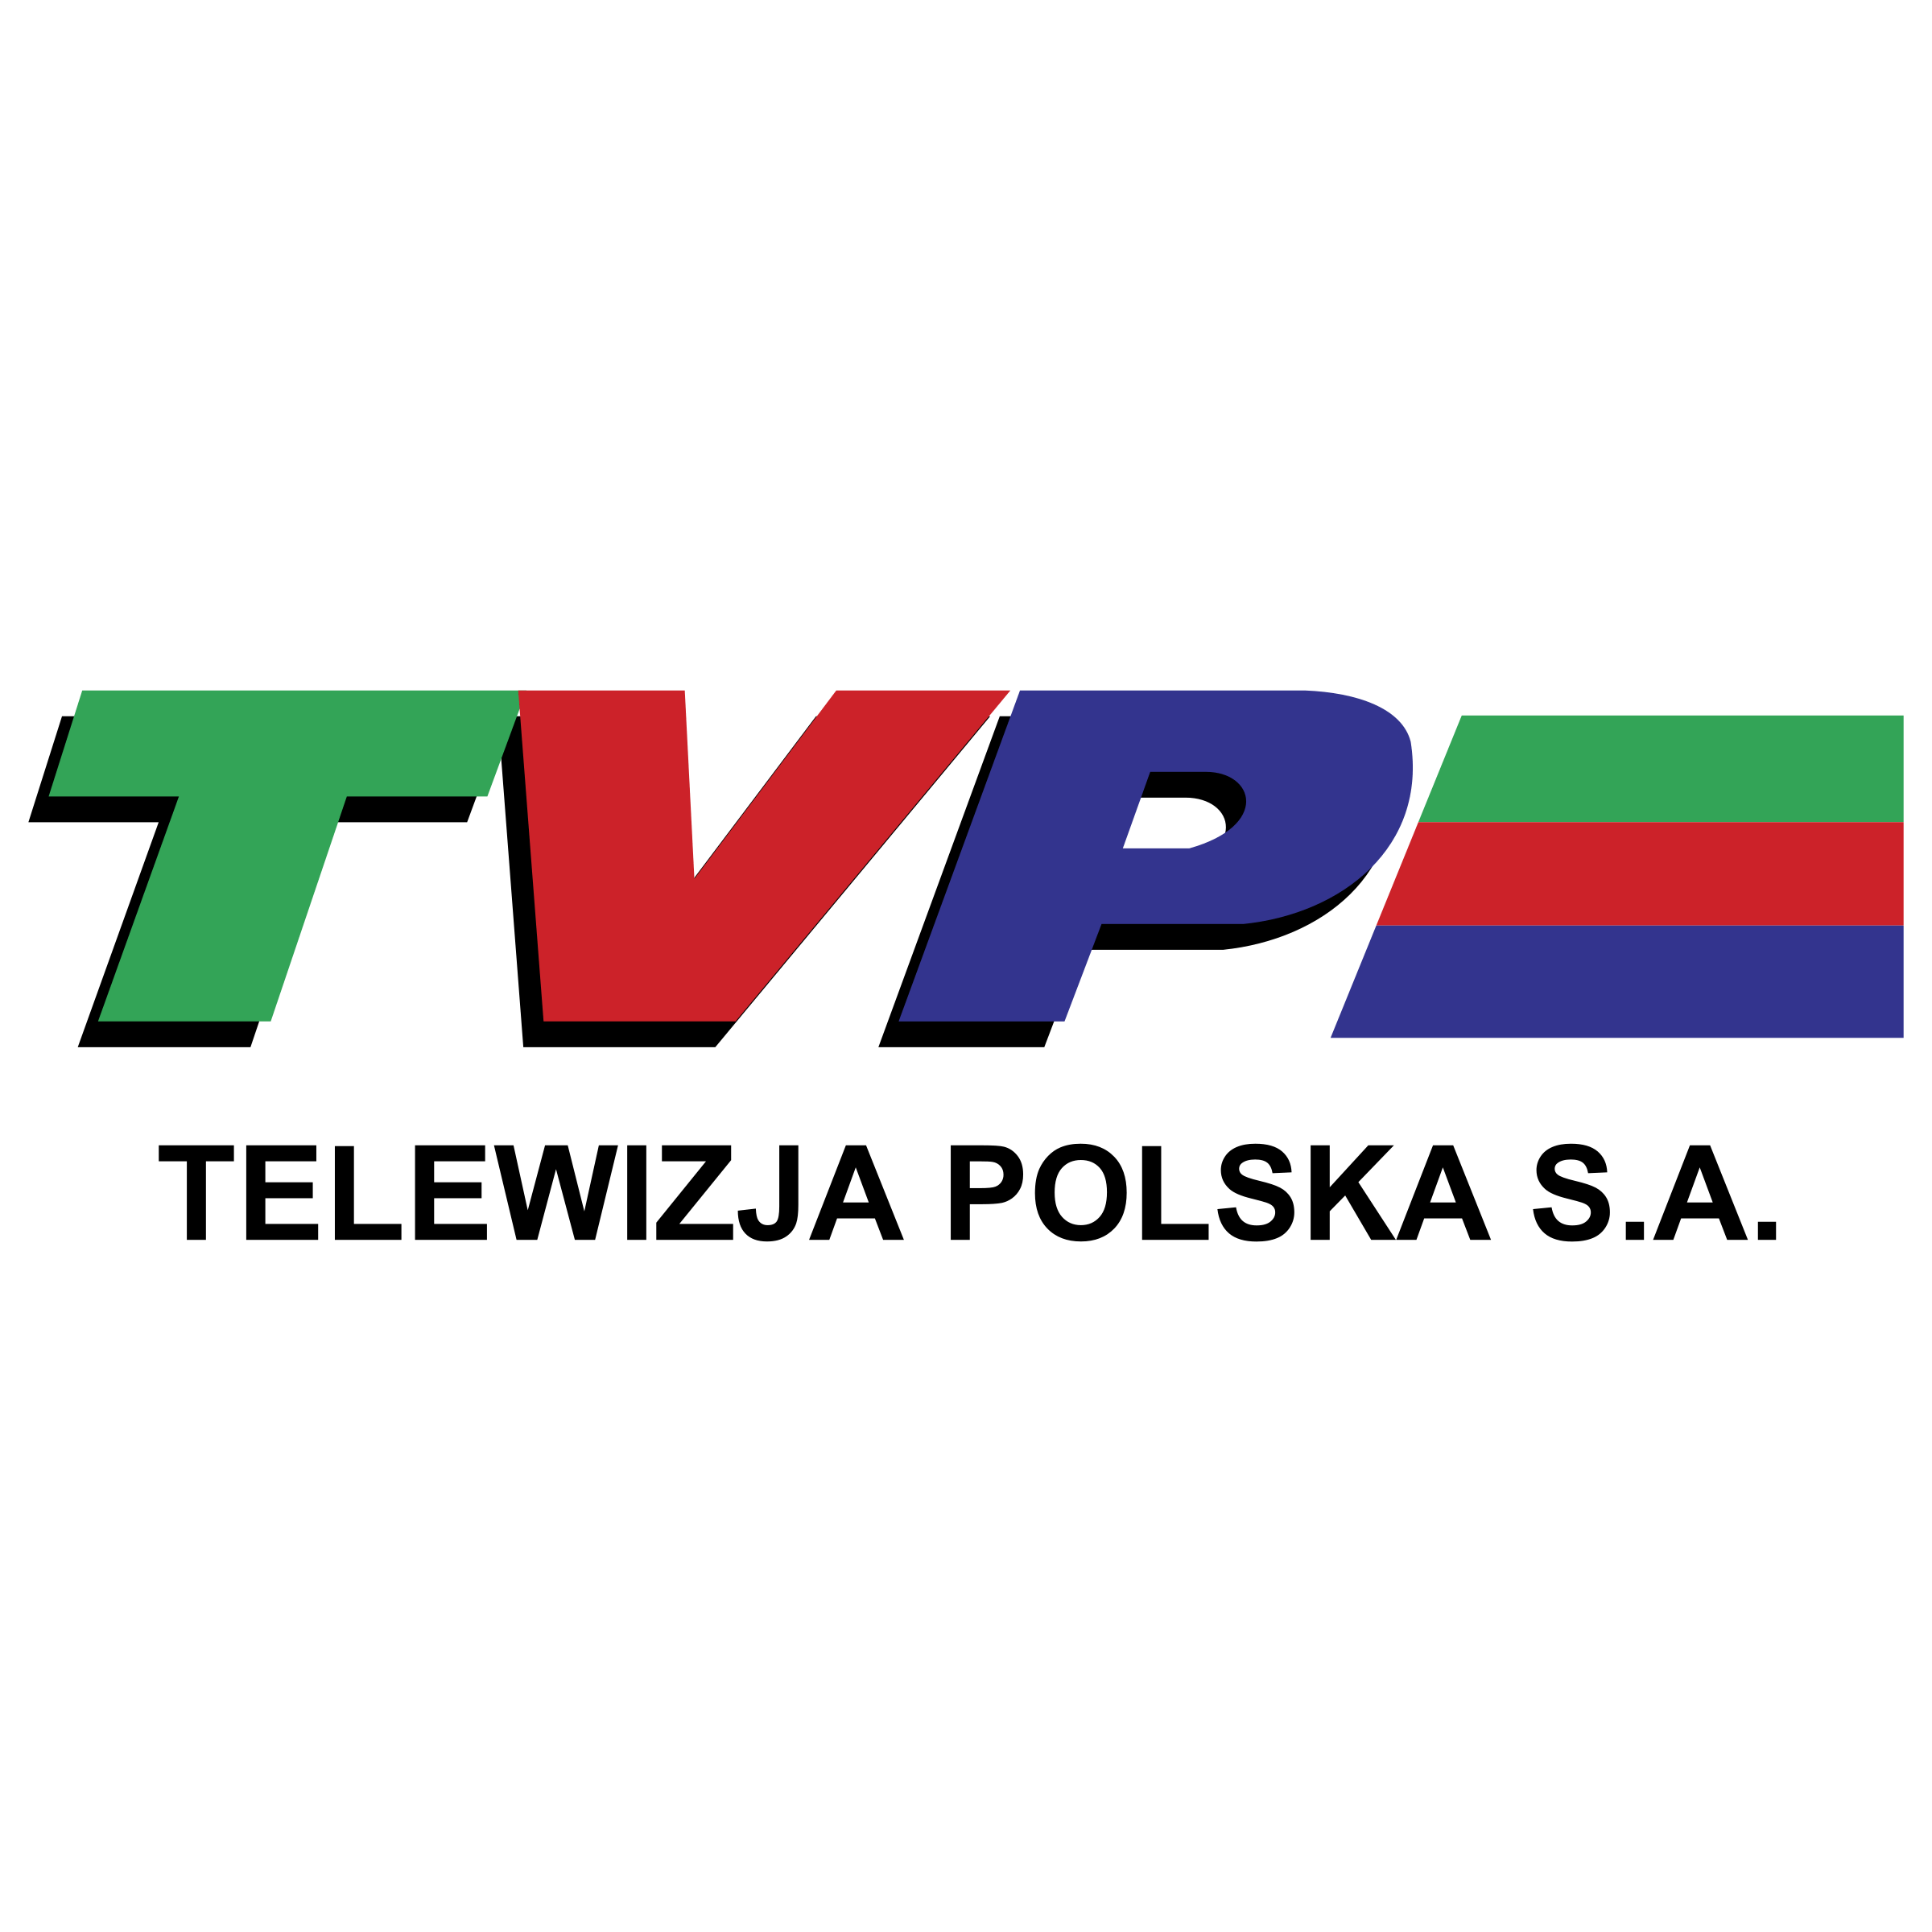 TVP Logo - TVP Logo PNG Transparent & SVG Vector - Freebie Supply